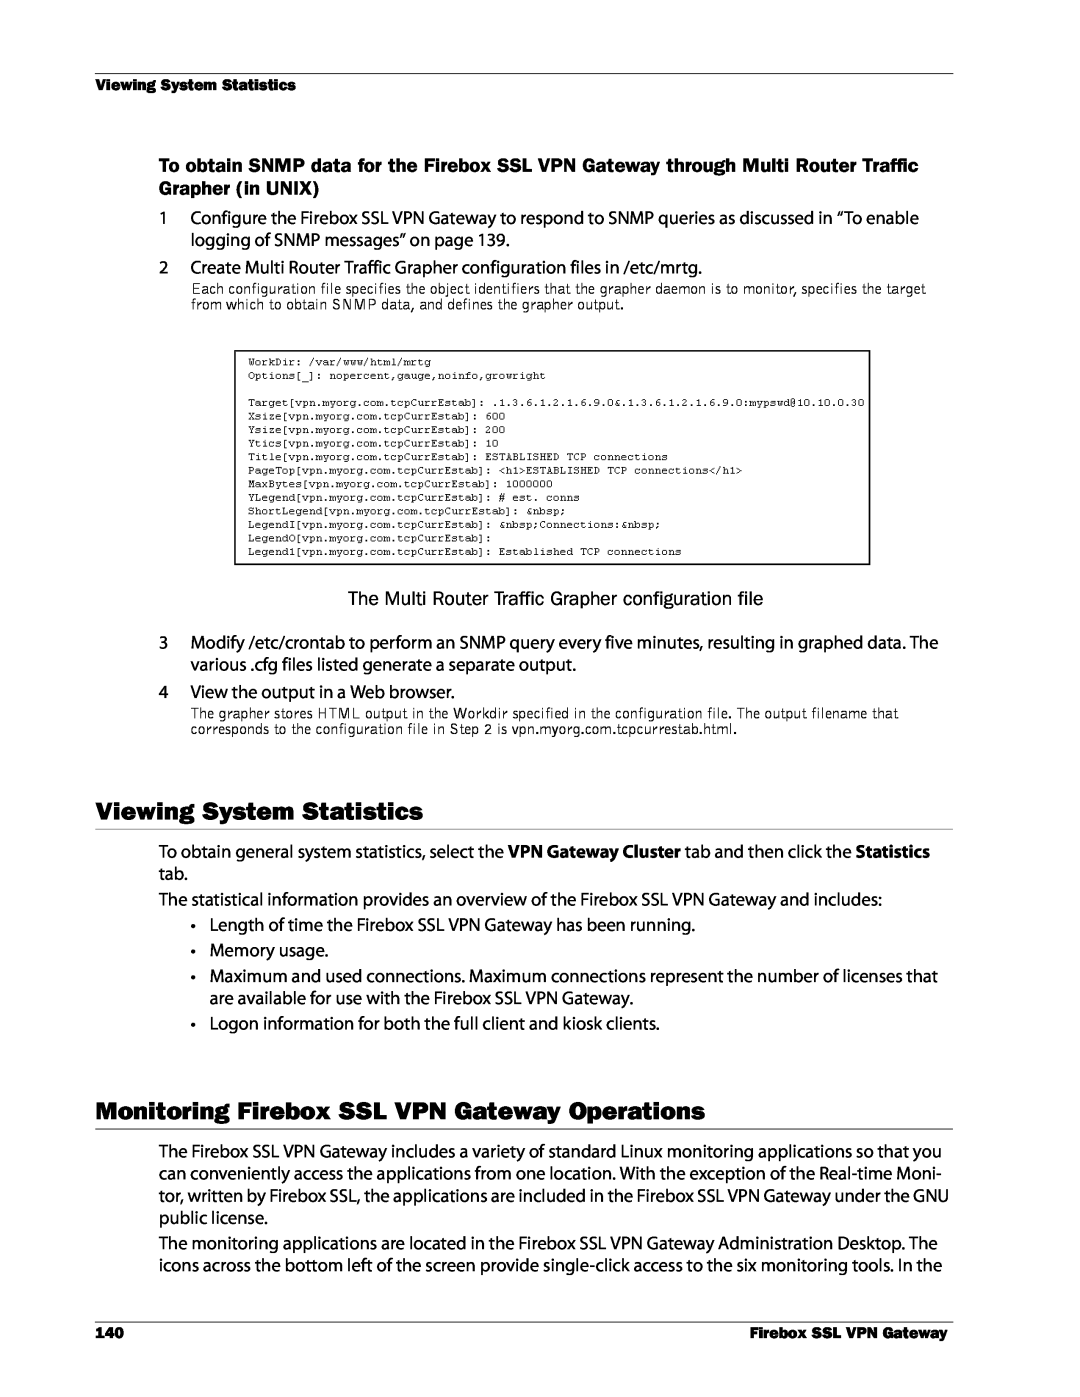 WatchGuard Technologies manual Viewing System Statistics, Monitoring Firebox SSL VPN Gateway Operations 